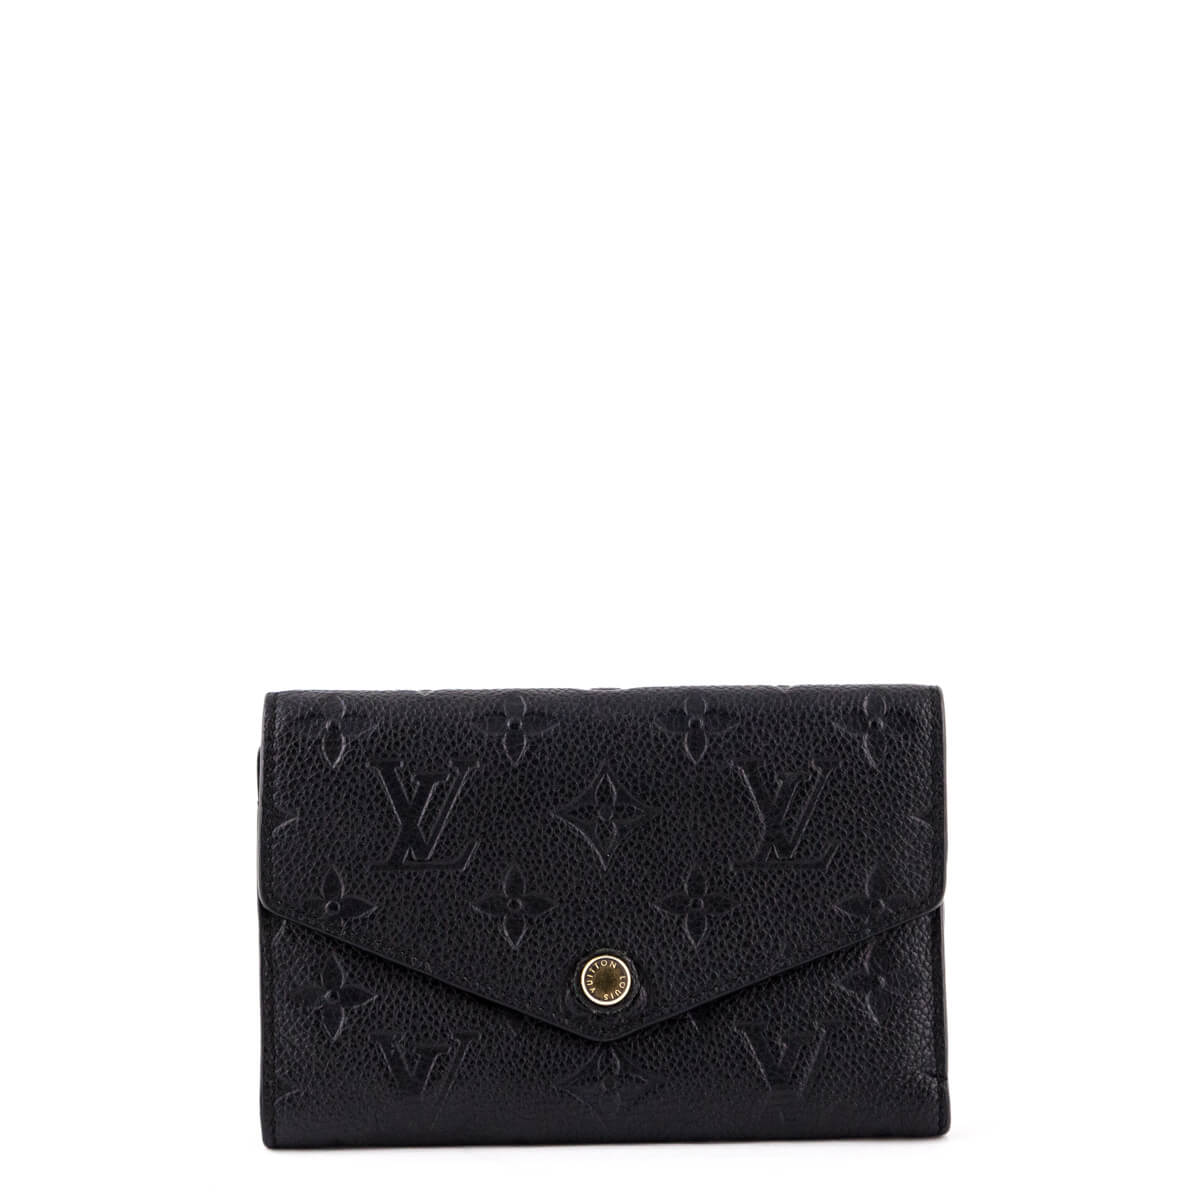 Louis Vuitton Black Monogram Empreinte Curieuse Compact Wallet - Preowned LV